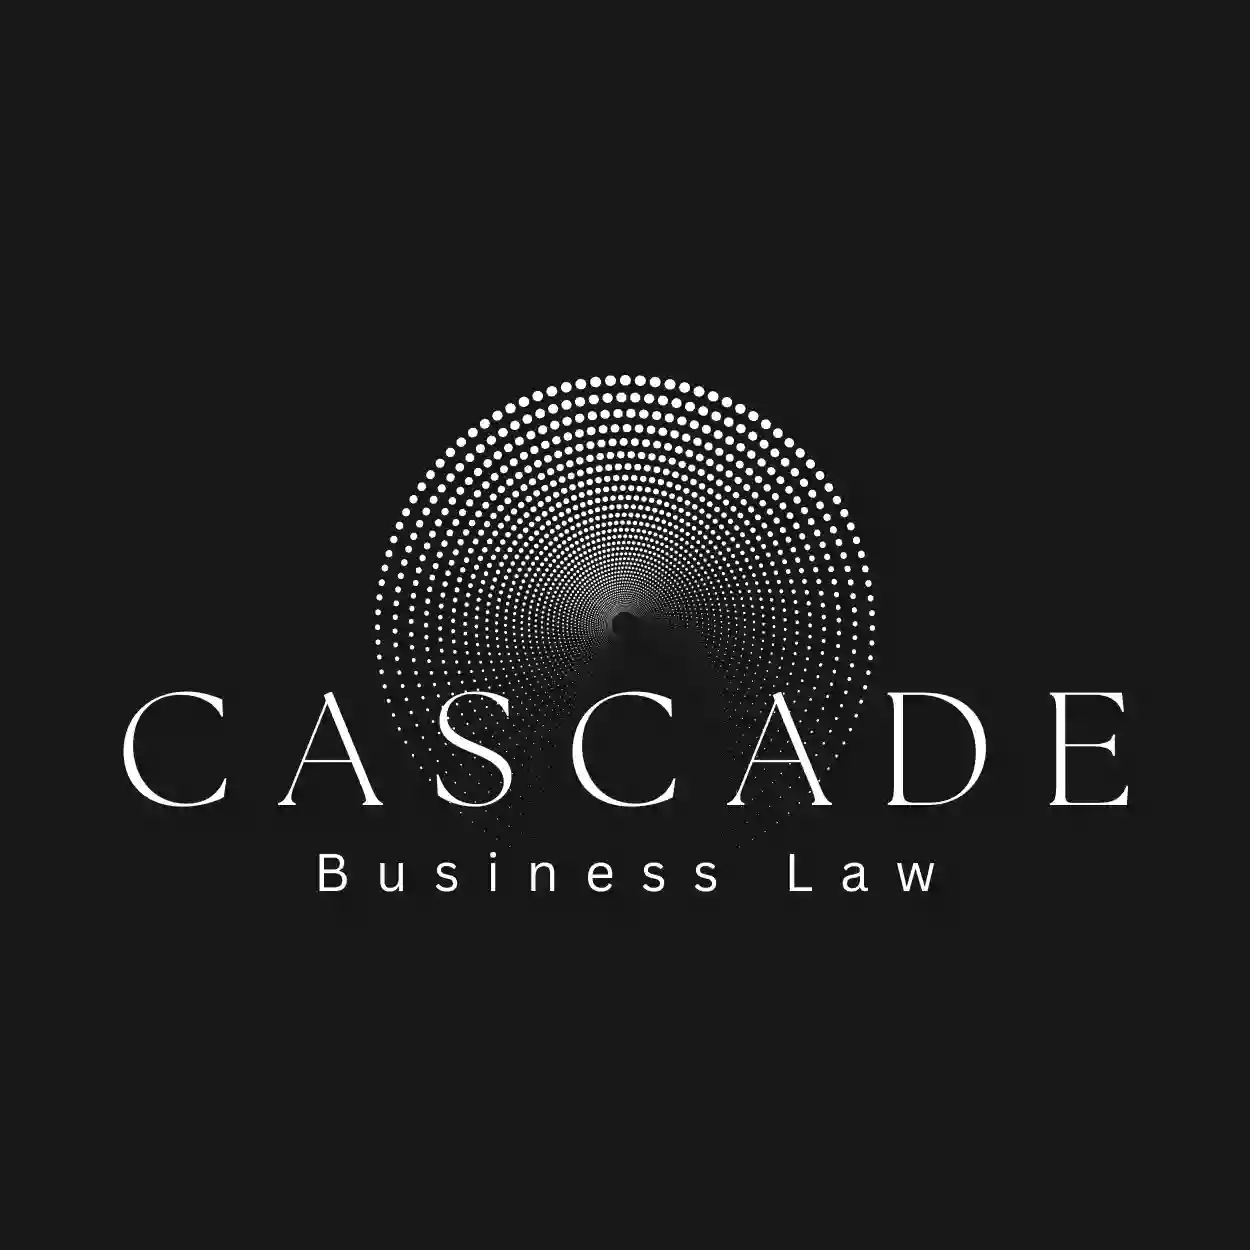 Cascade Business Law